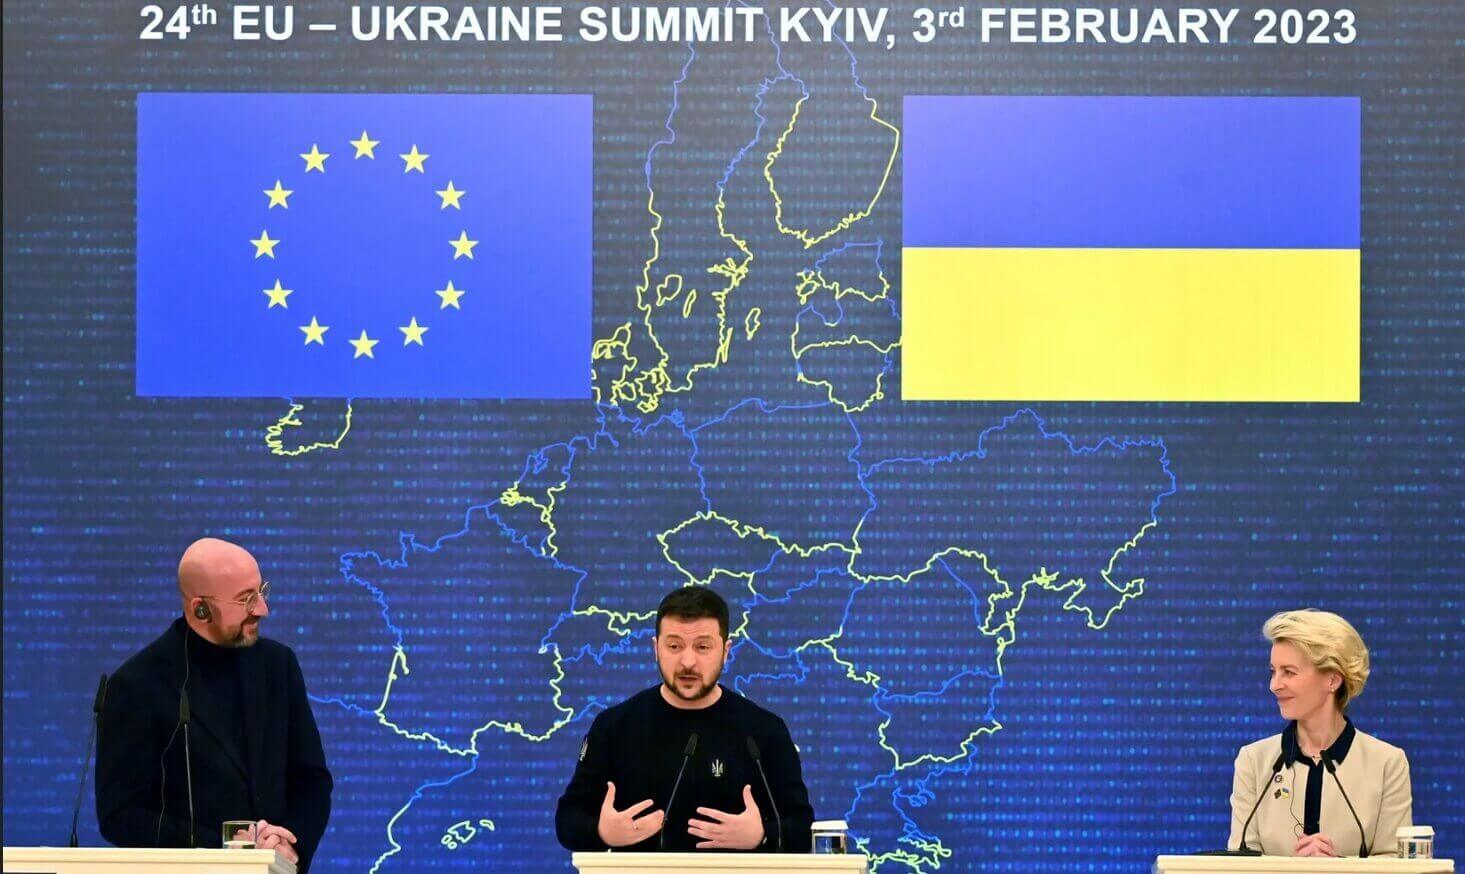 Il presidente dell'Ucraina Volodymyr Zelens'kyj con i leader europei Charles Michel e Ursula von der Leyen in occasione del summit a Kyiv del 3 febbraio 2023 (foto Sergei Supinsky, AFP)